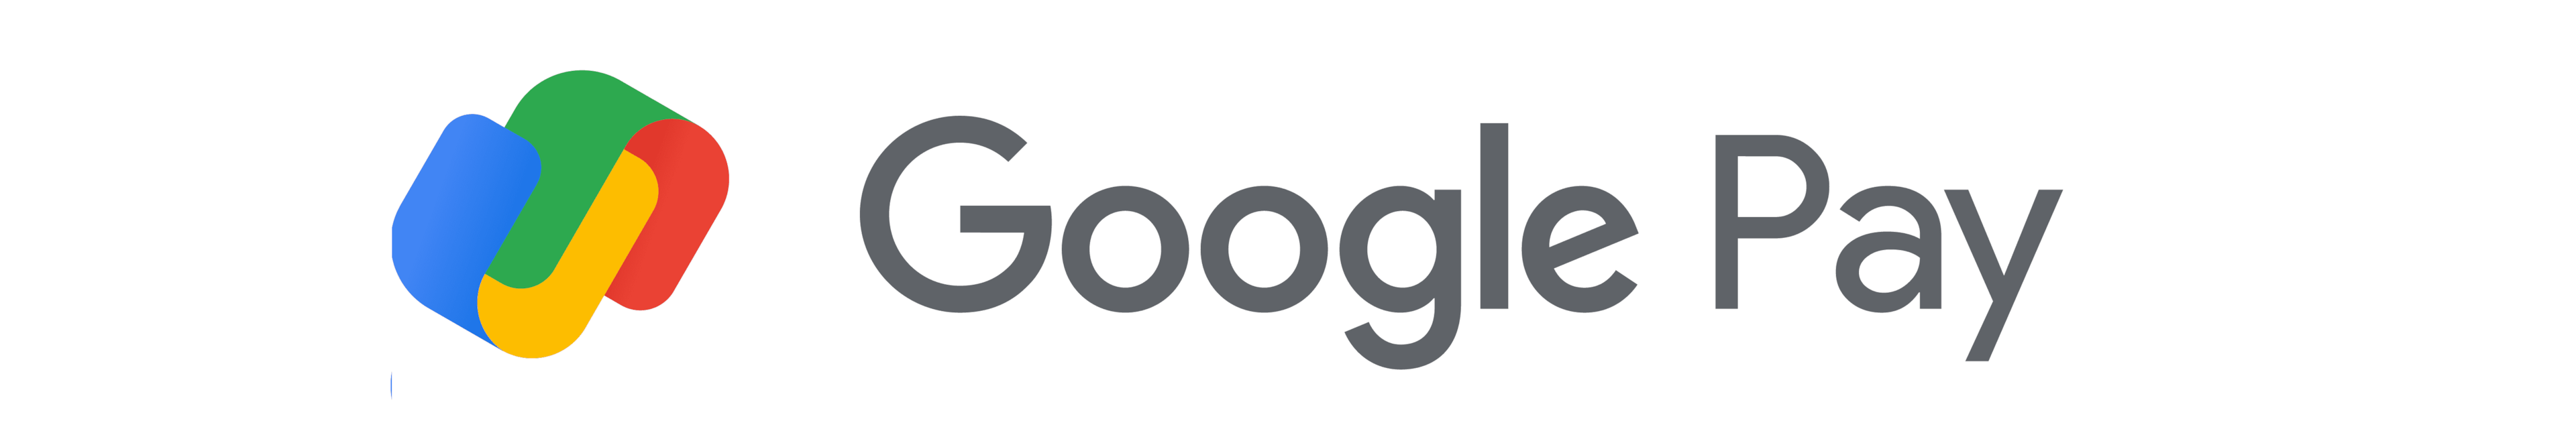 Google Pay Logo 